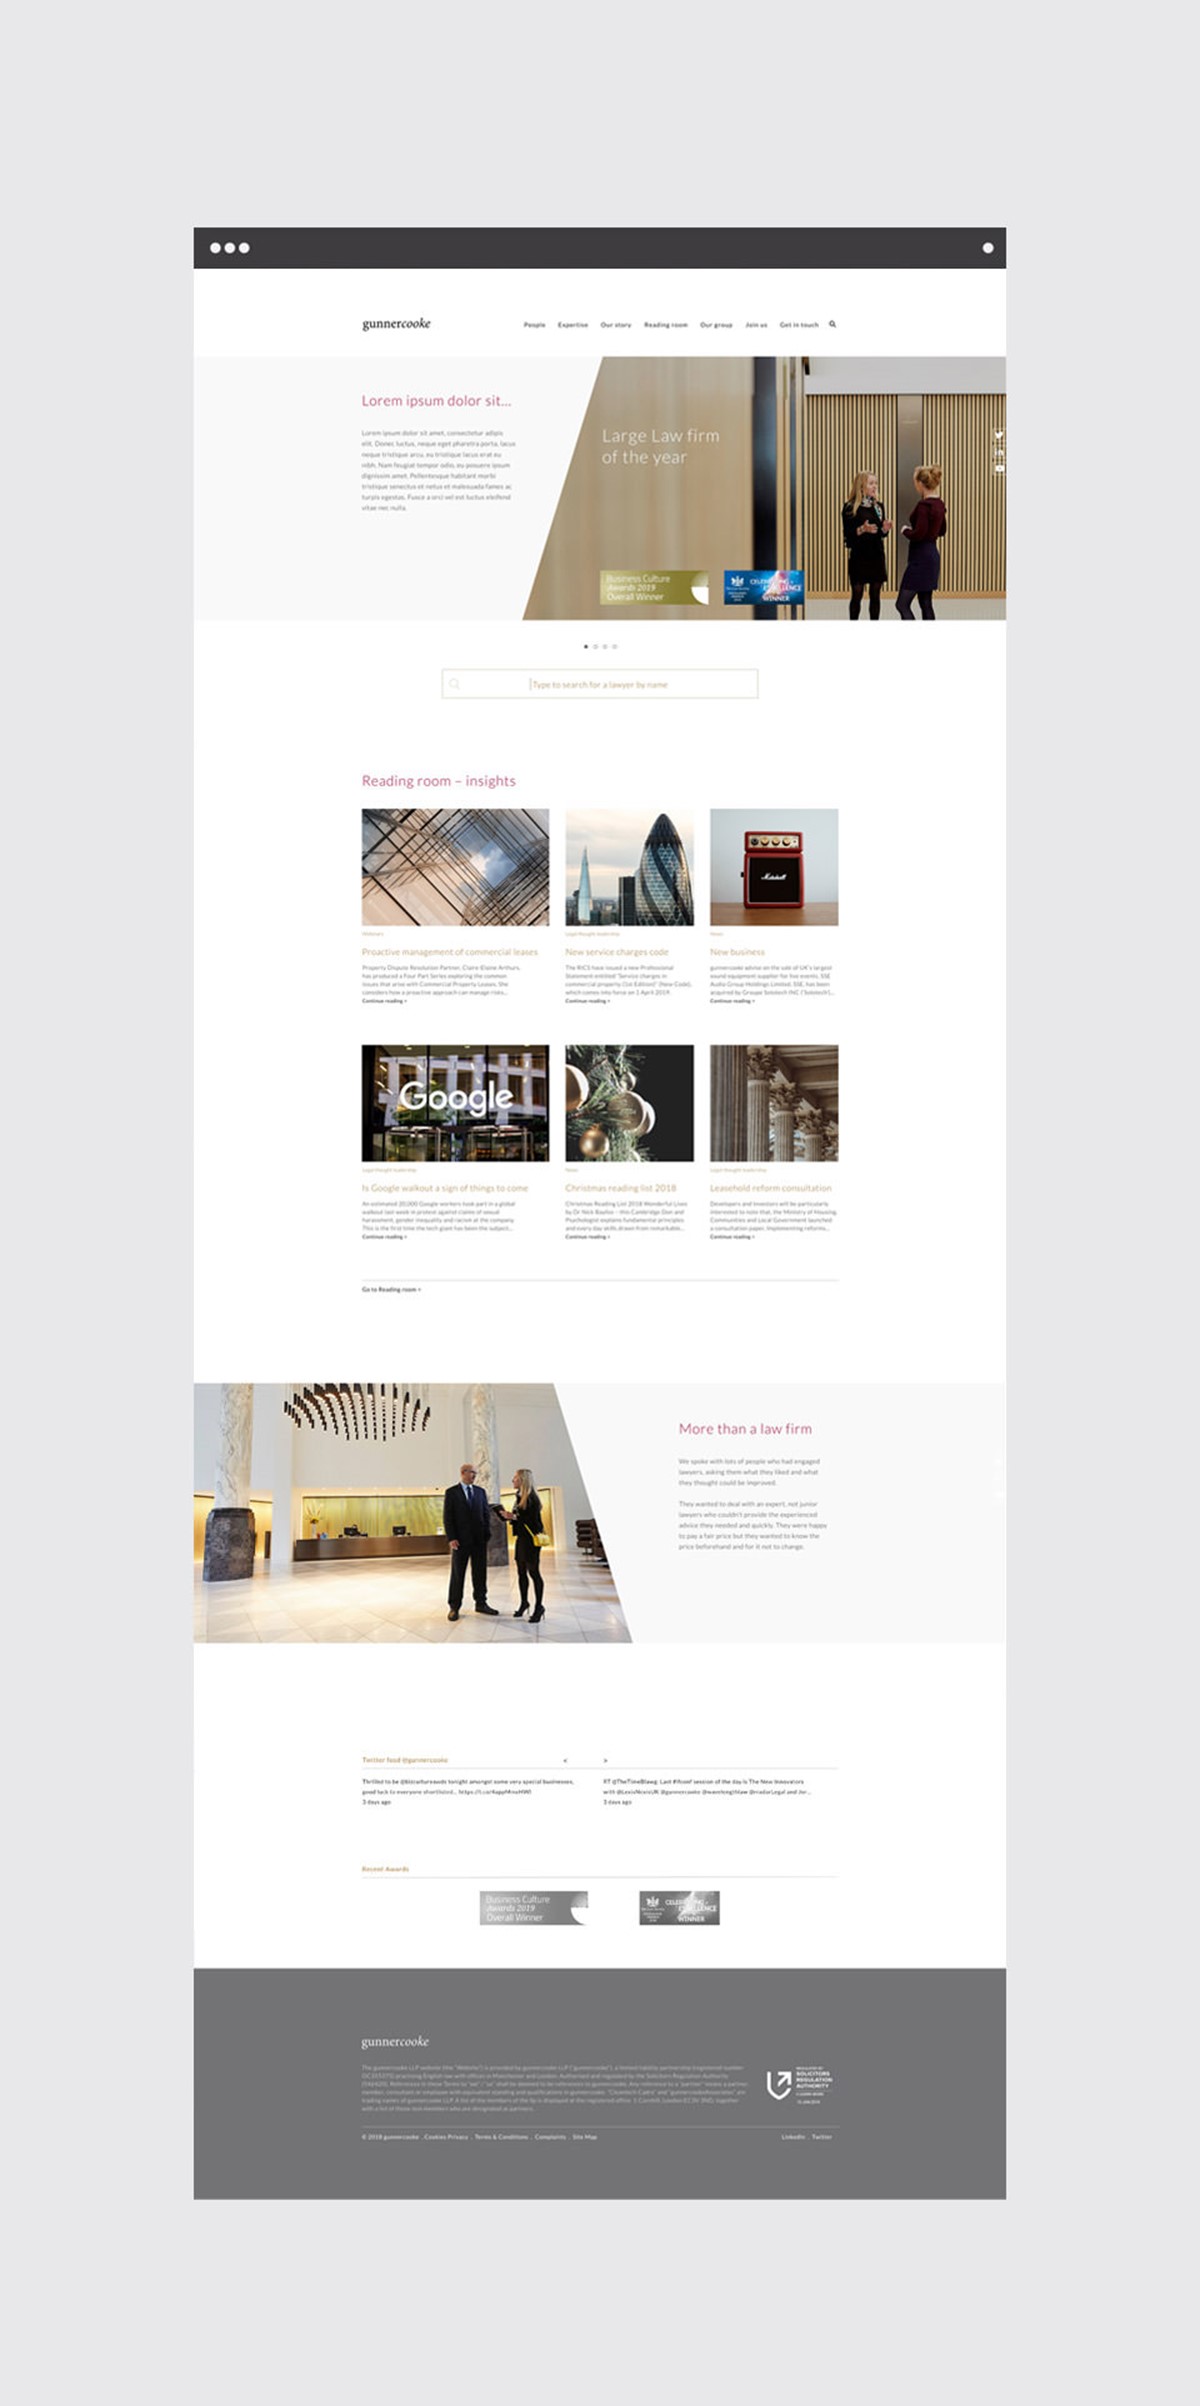 Gunnercooke. Law firm. Homepage. Website design by Superfried.